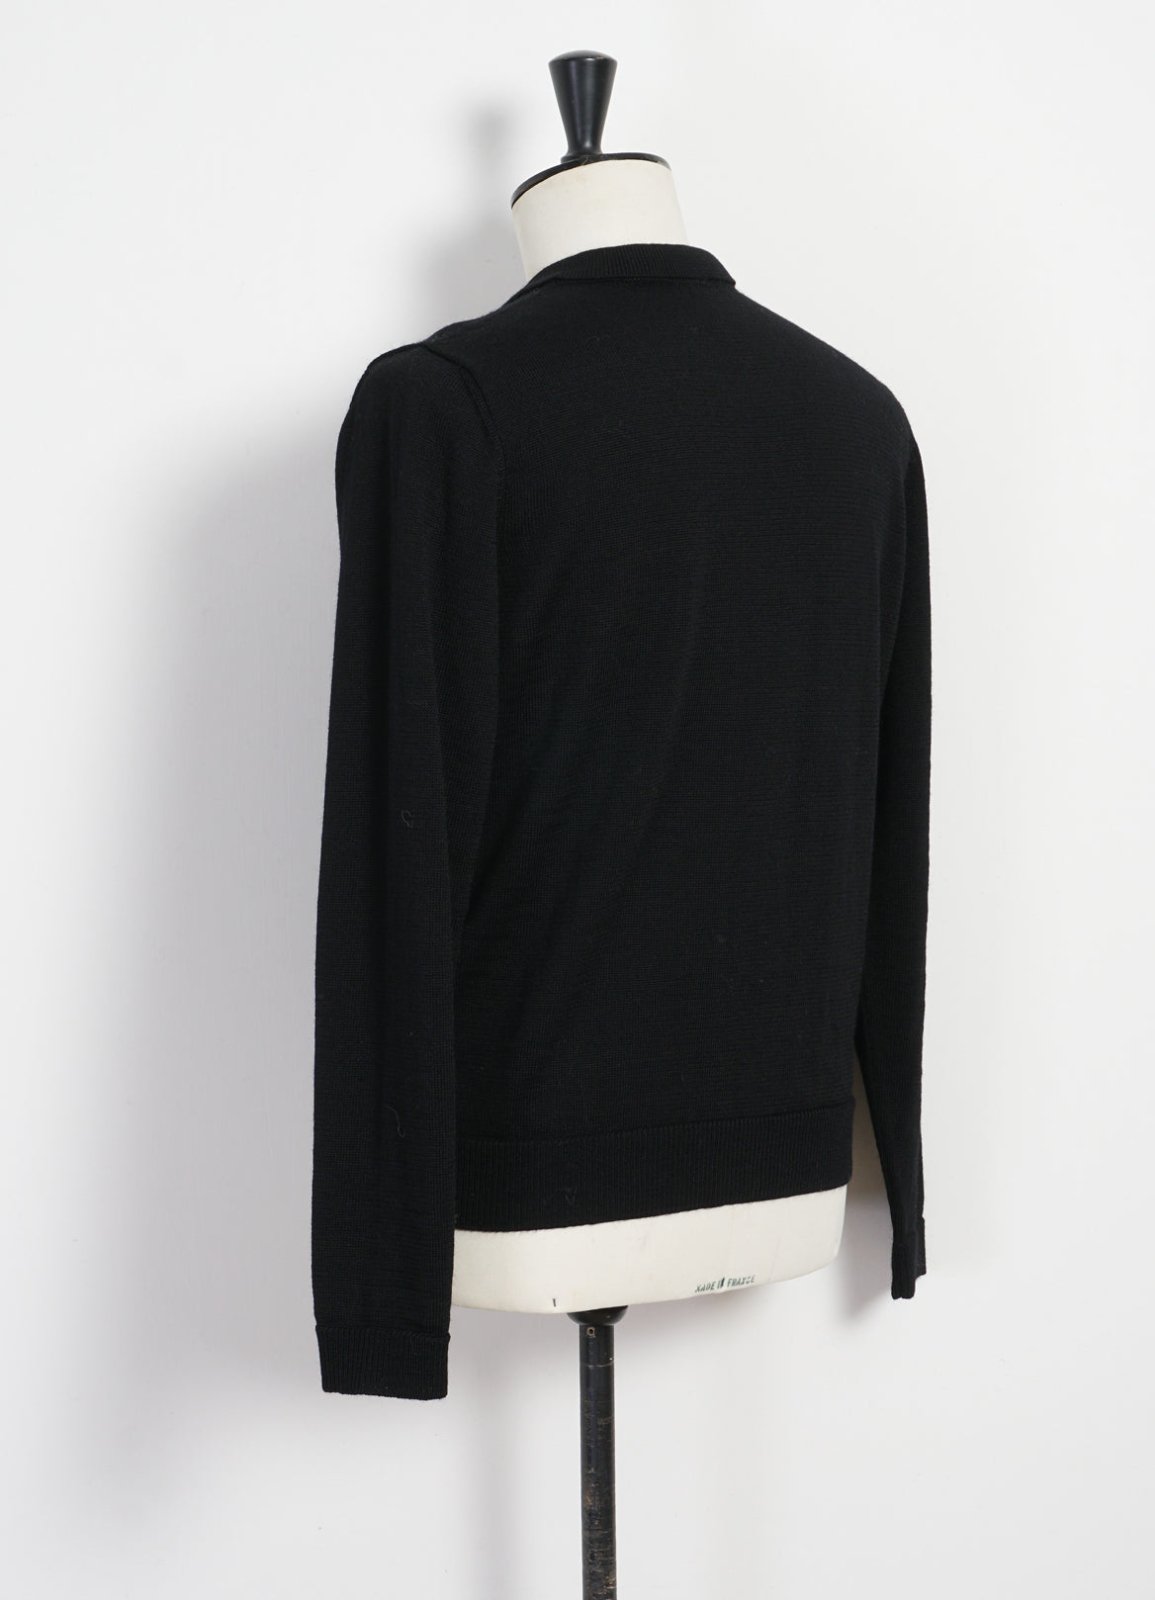 HANSEN GARMENTS - ANDRE | Knitted Crew Neck Sweater | Black - HANSEN Garments